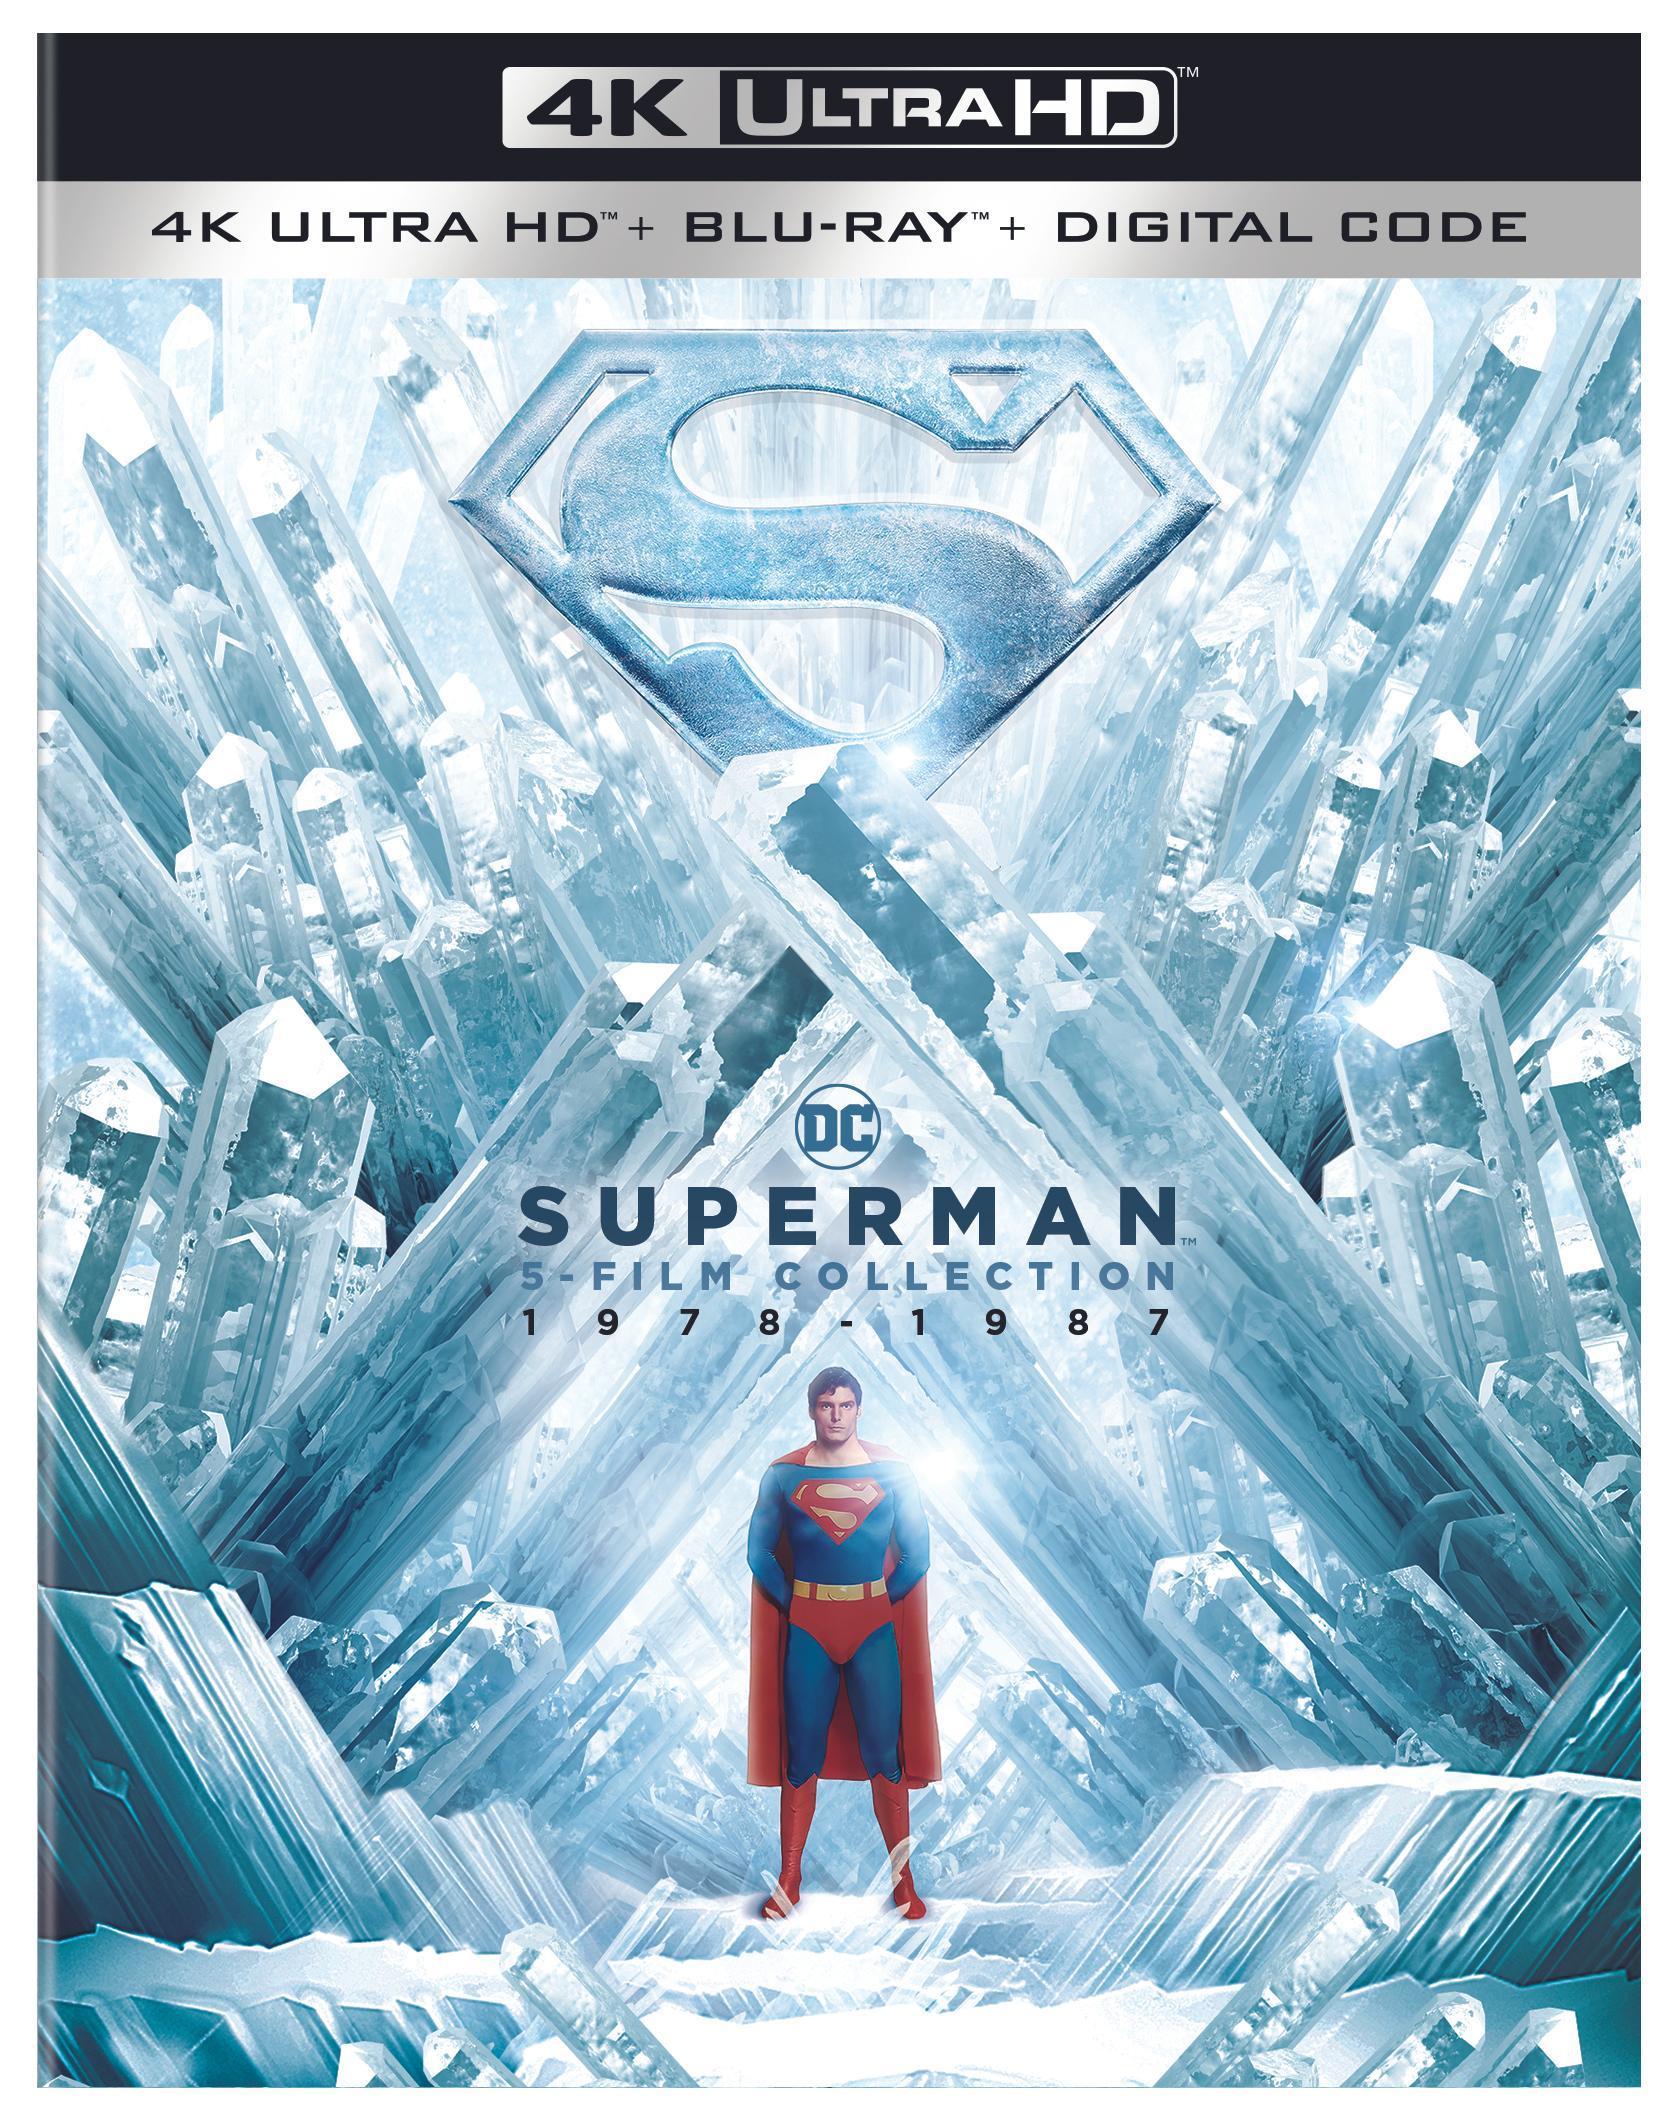 Superman 5-film Collection (4K Ultra HD + Blu-ray + Digital Download) - UHD   - Adventure Movies On 4K Ultra HD Blu-ray - Movies On GRUV